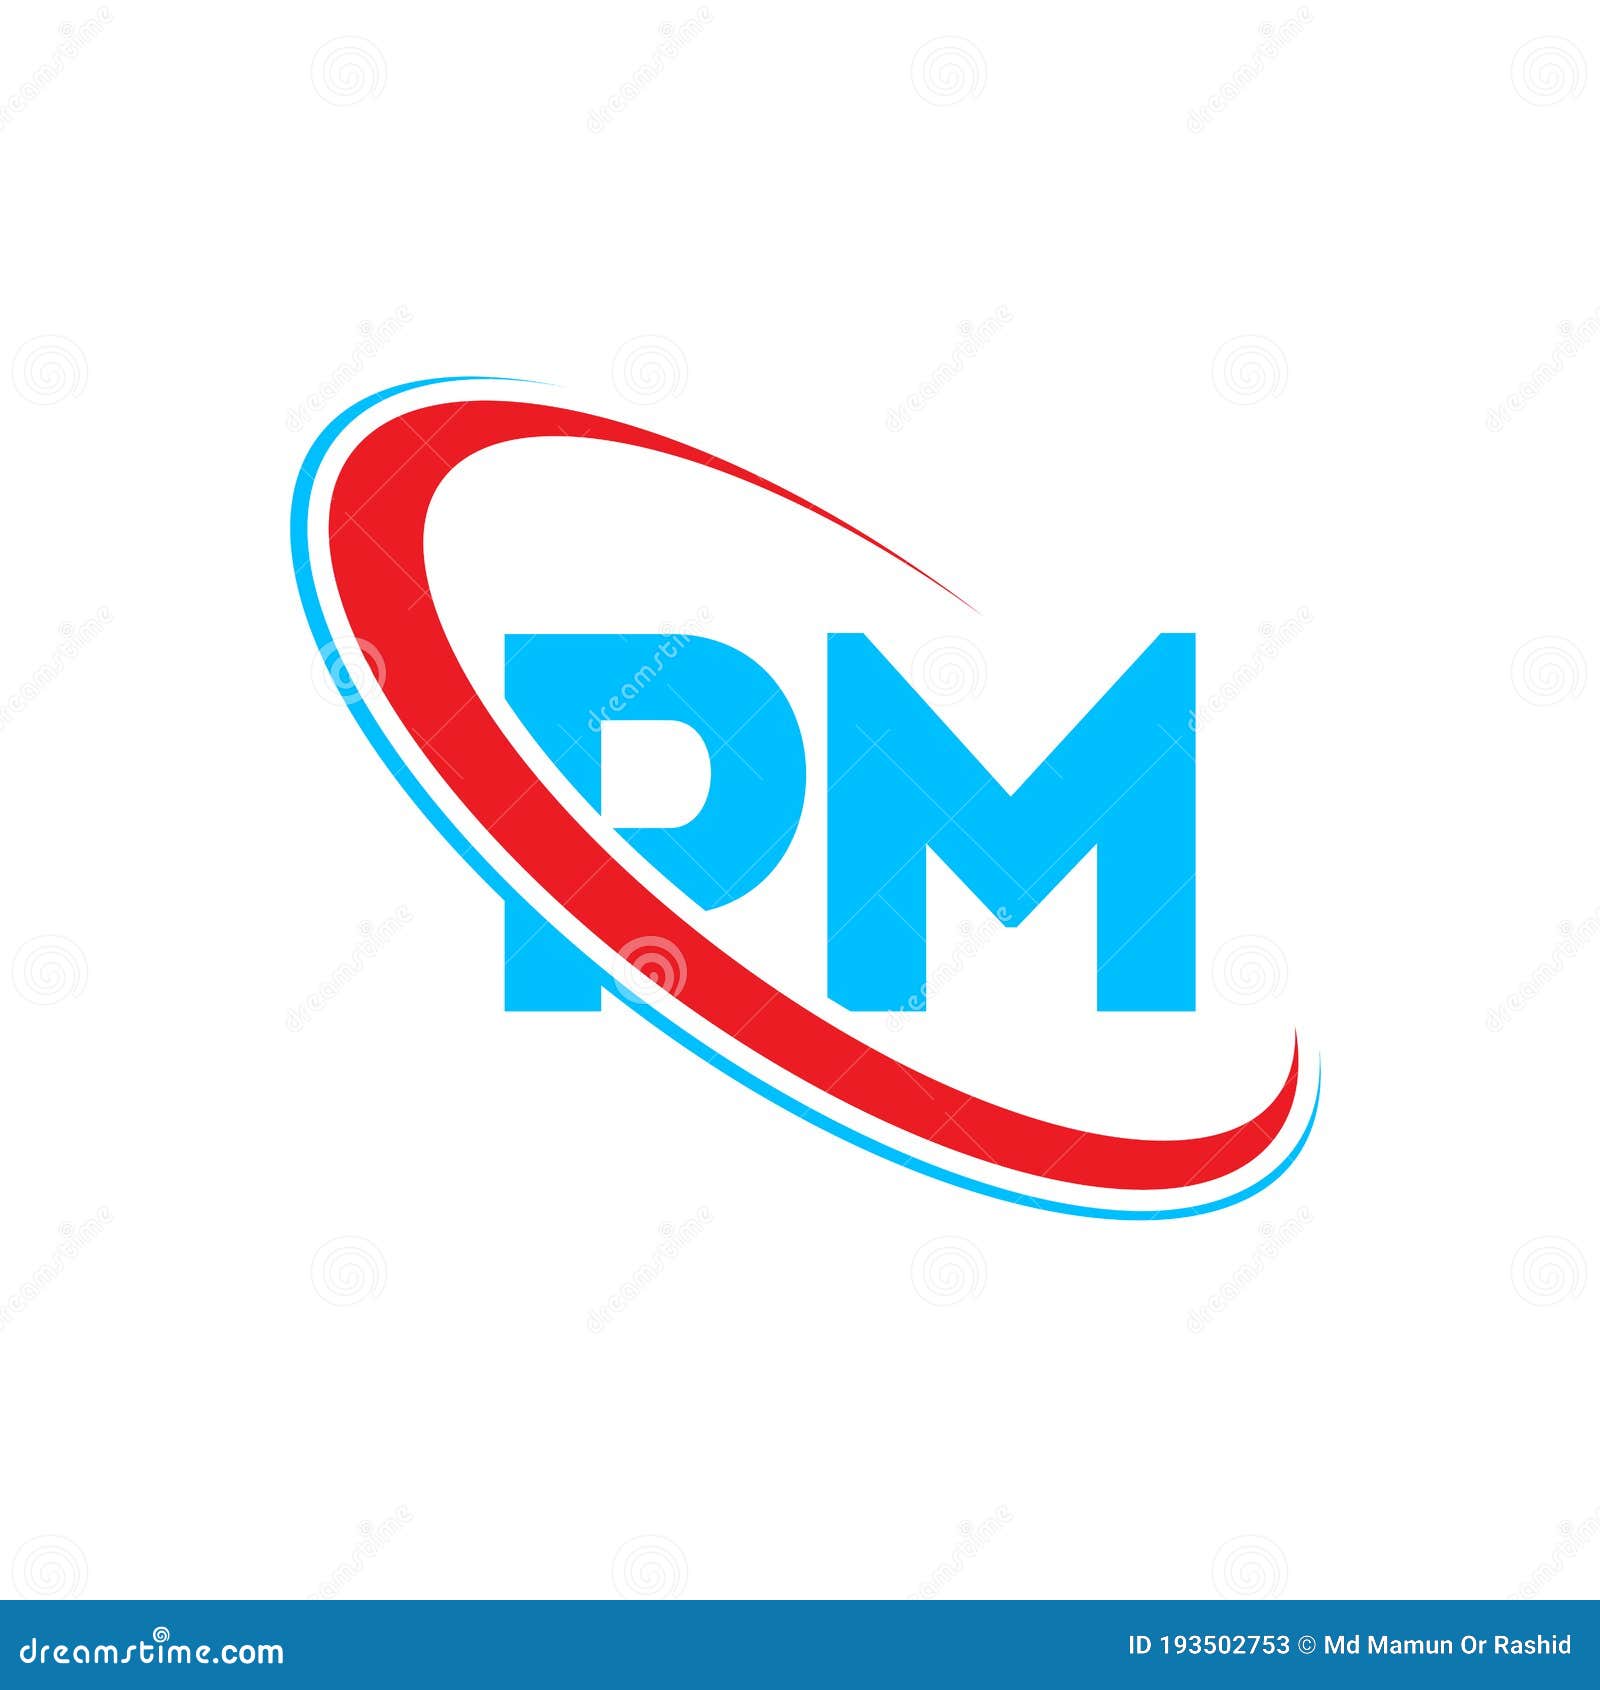 Initial Letter Vector Design Images, Initial Letter Pm Logo